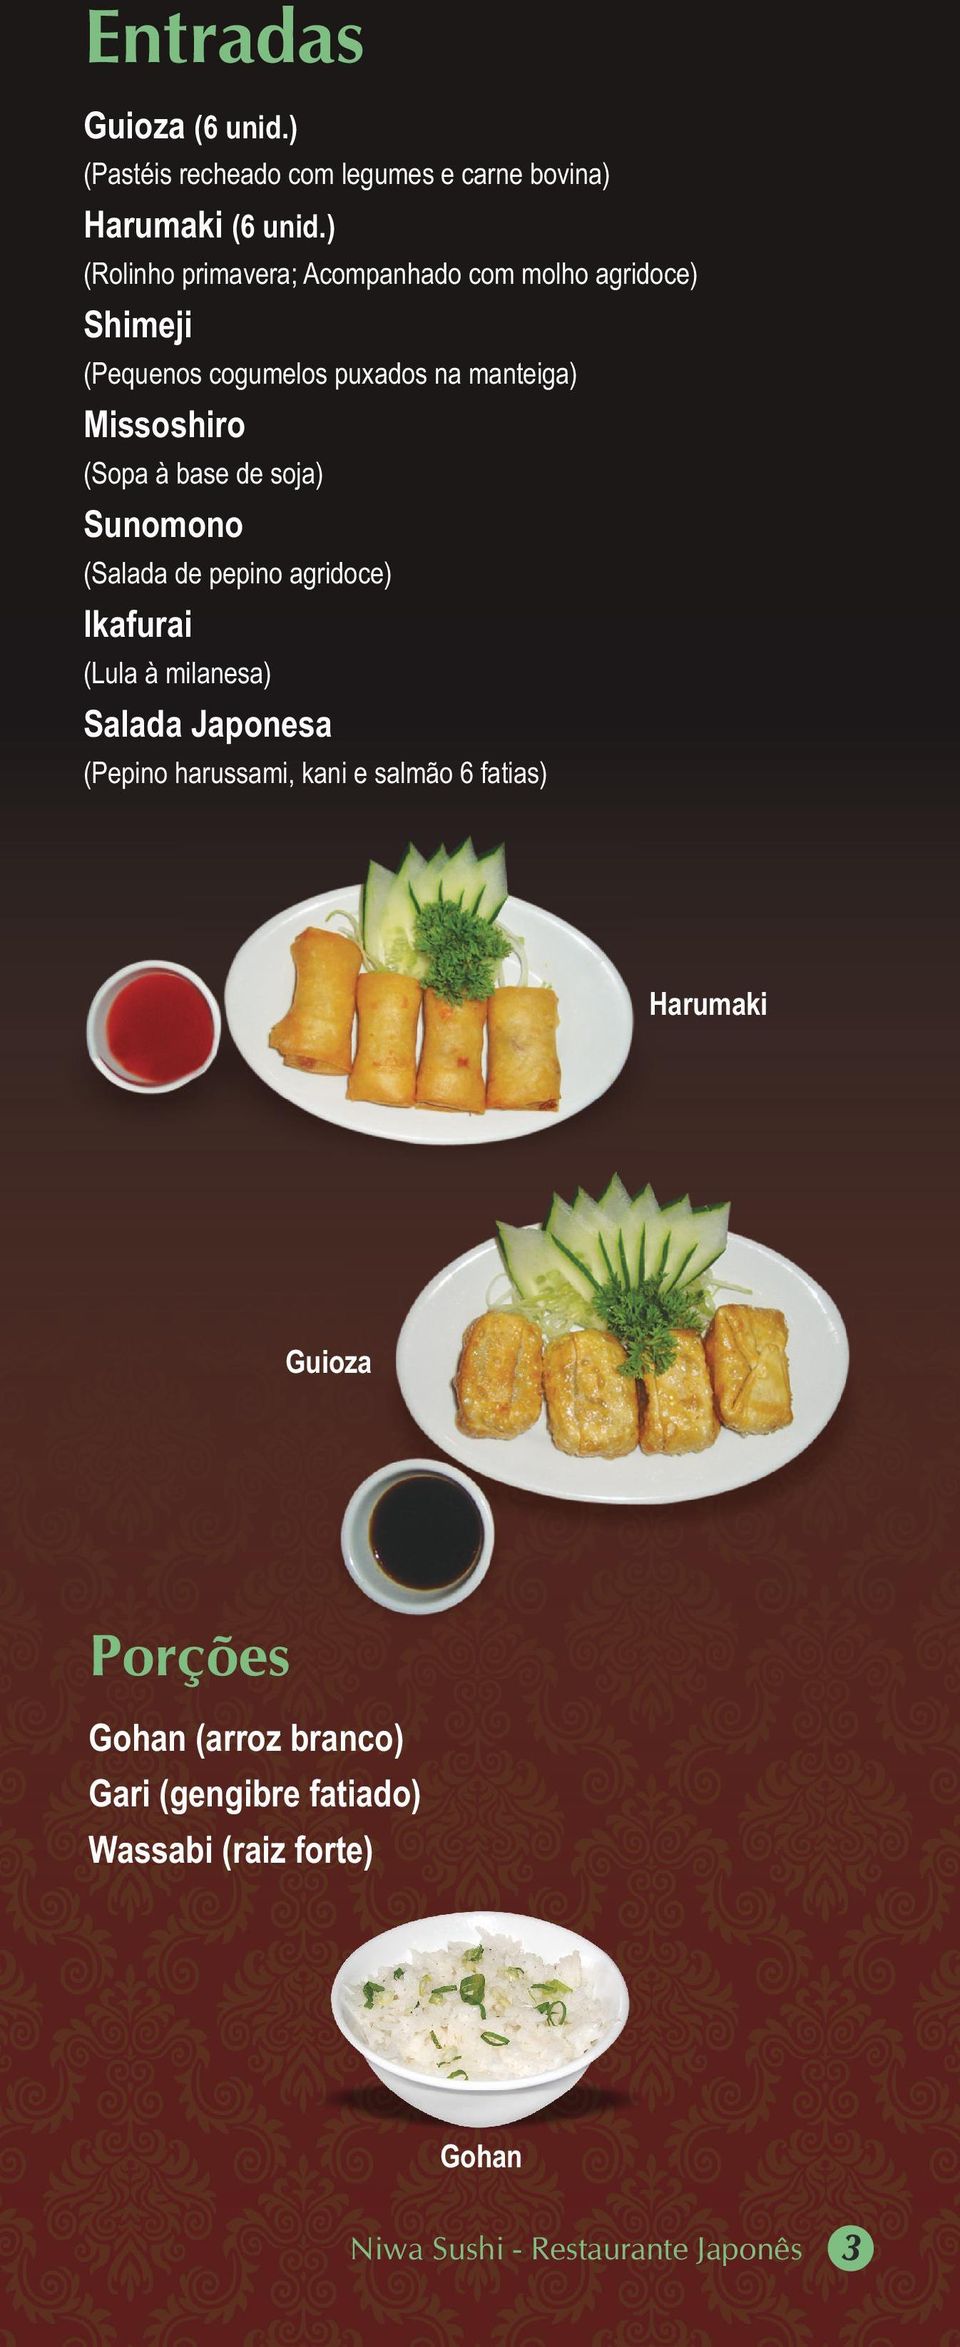 à base de soja) Sunomono (Salada de pepino agridoce) Ikafurai (Lula à milanesa) Salada Japonesa (Pepino harussami, kani